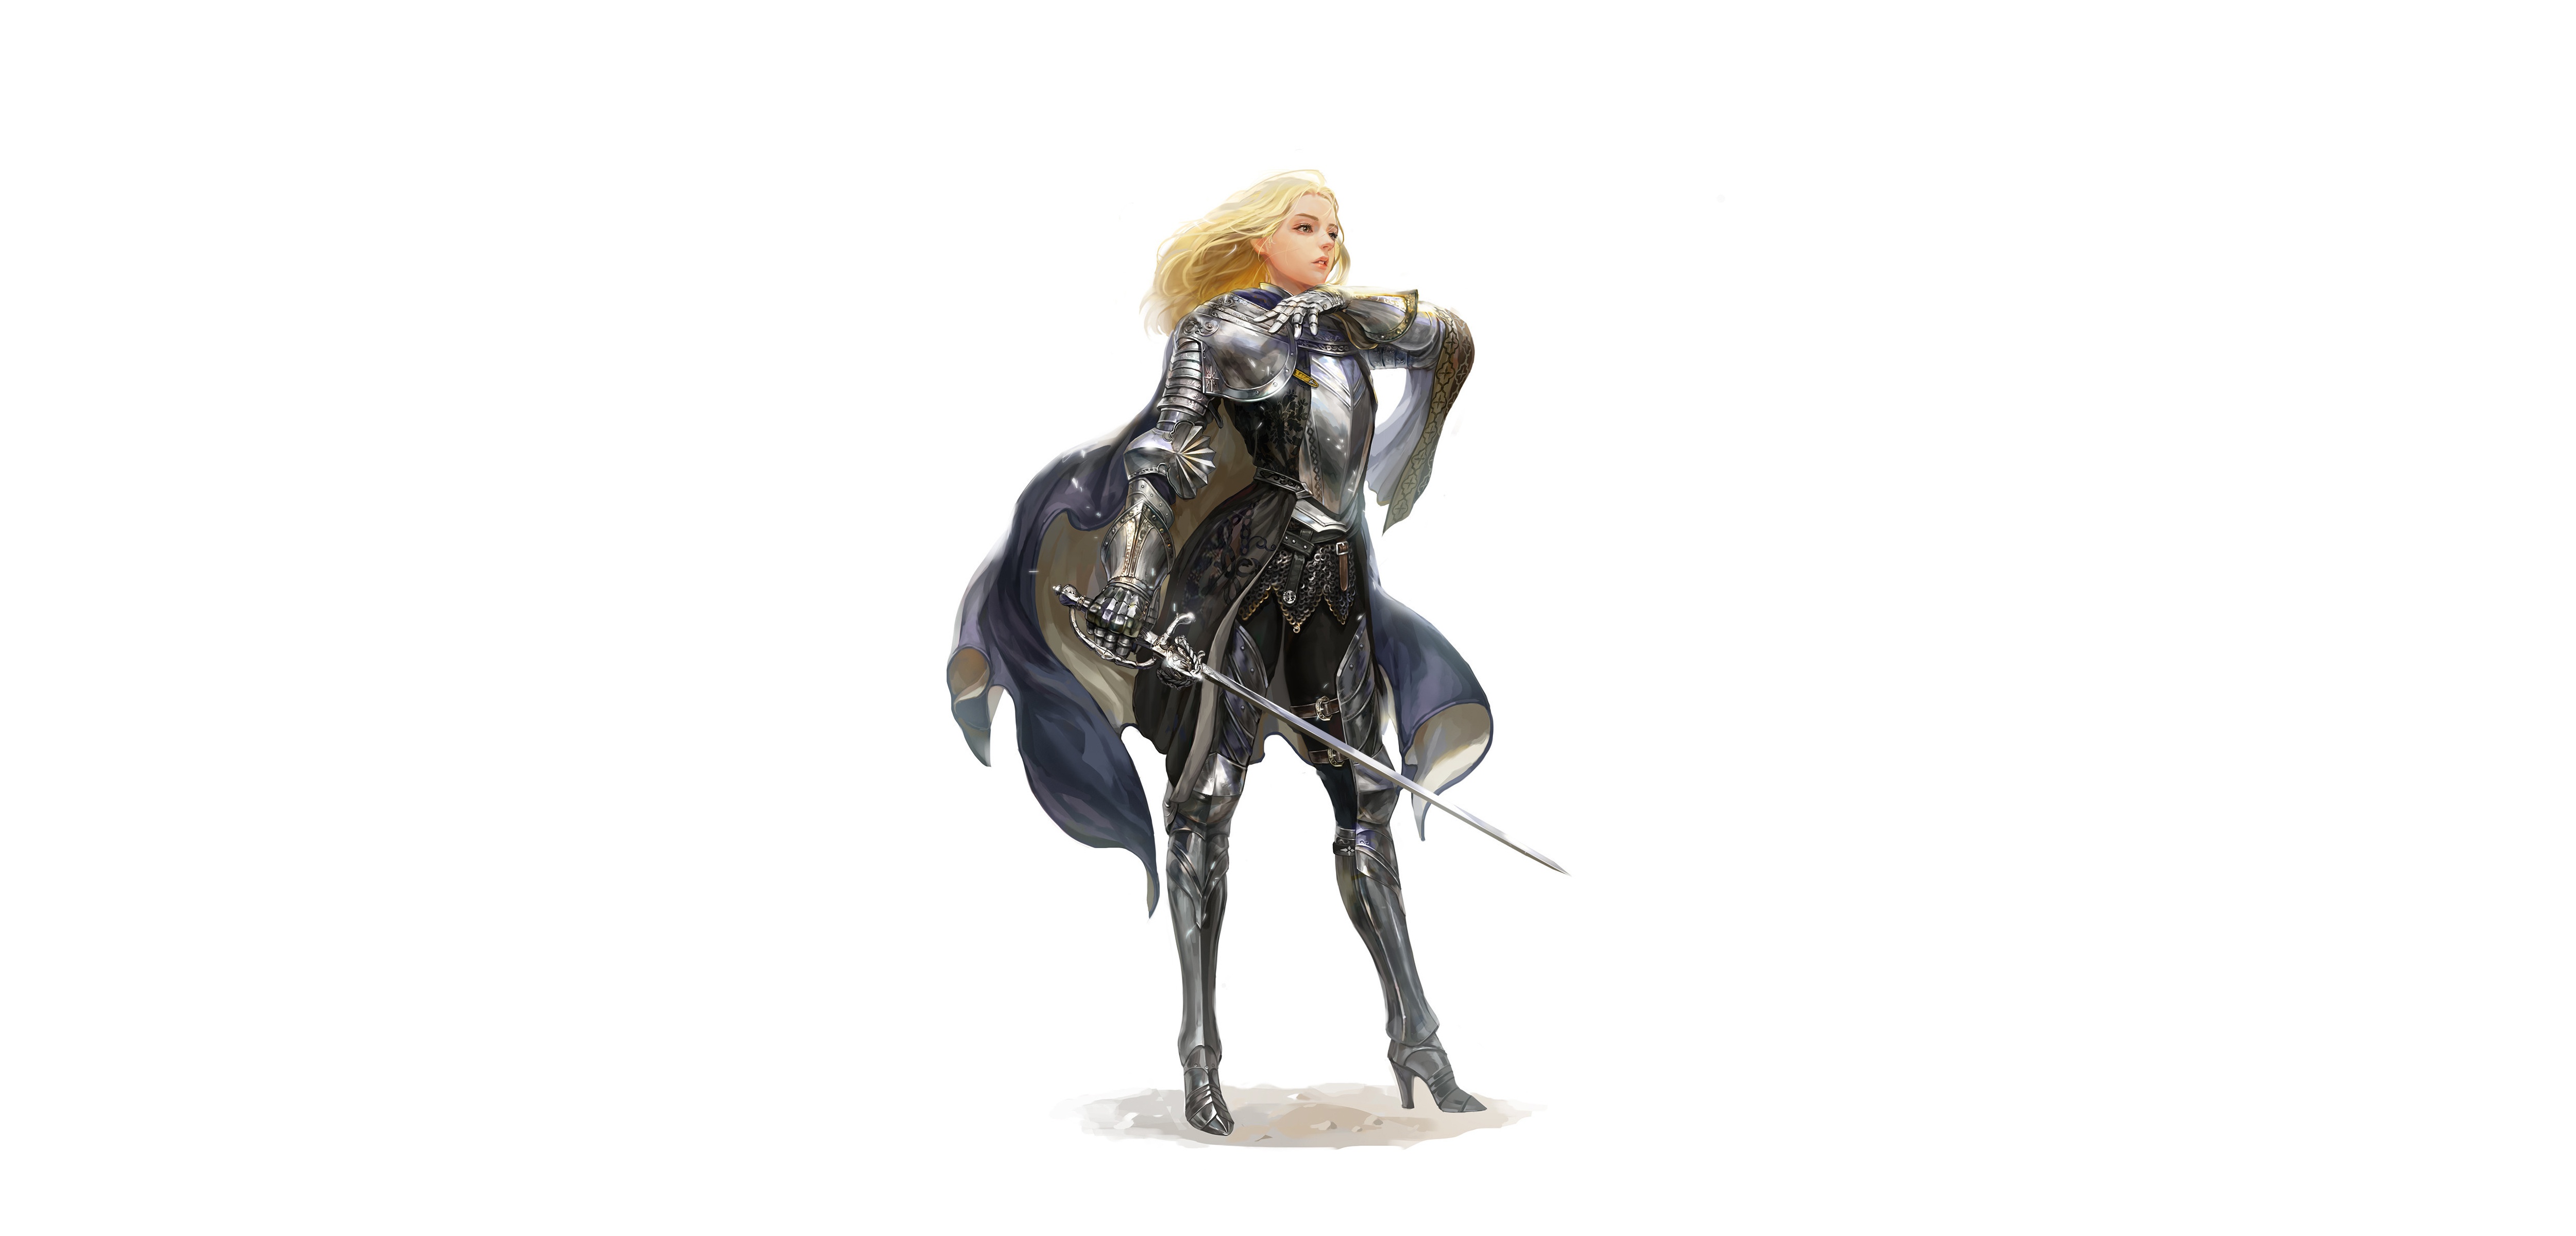 Armor Blonde Girl Knight Sword Woman Warrior 5000x2400